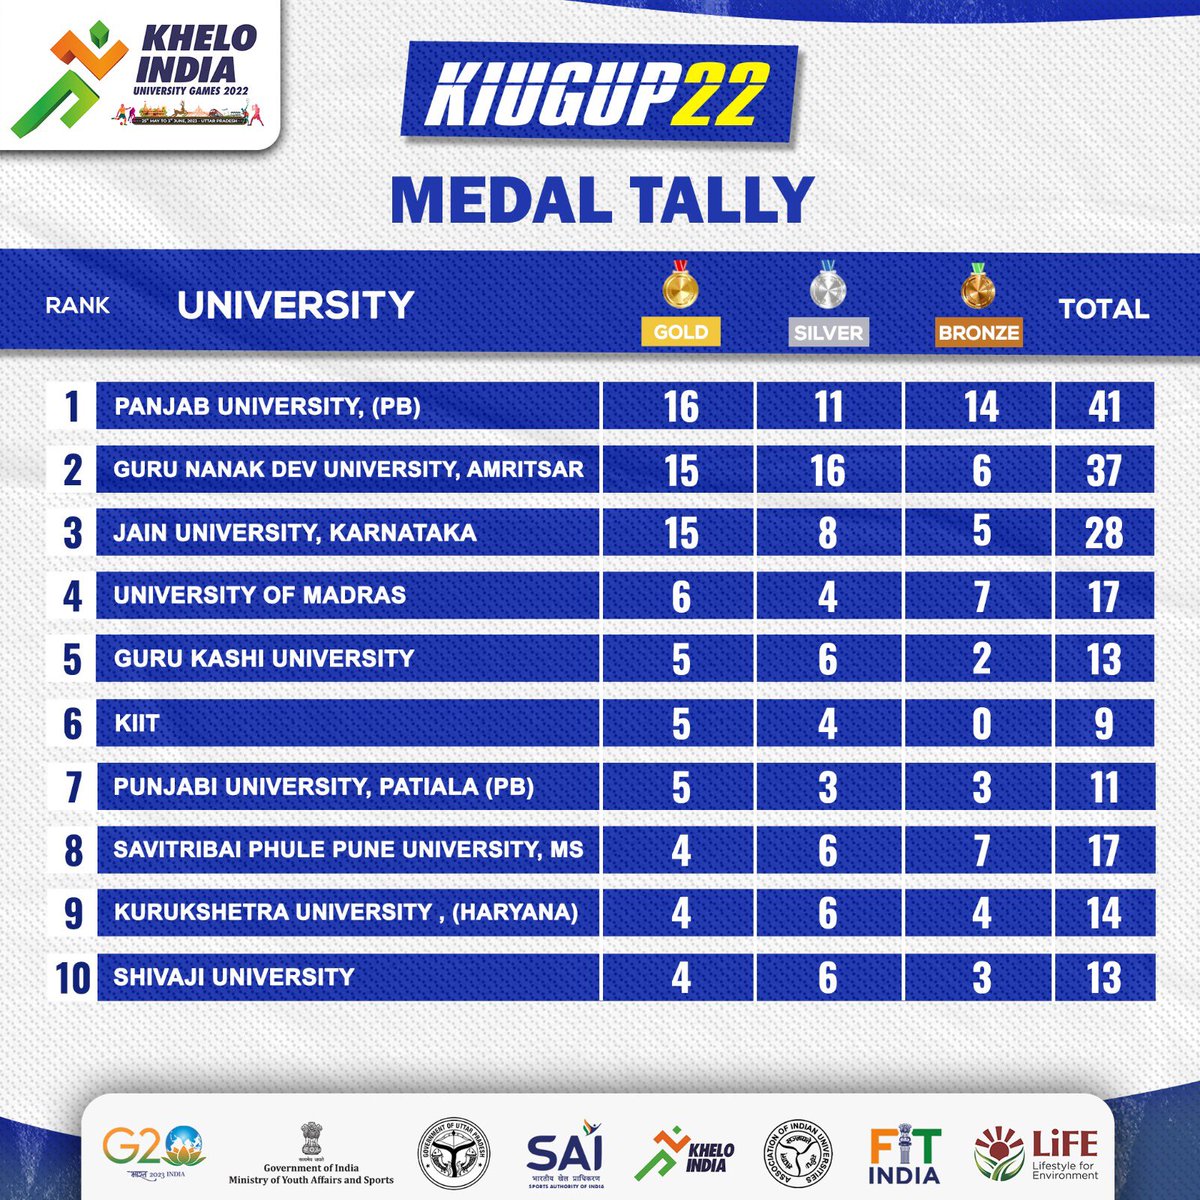 Medal Tally - Day 8 of #KIUGUP2022
.
.
#KheloIndia #KIUGUP#UttarPradesh #Sportsvent #Indianathlete